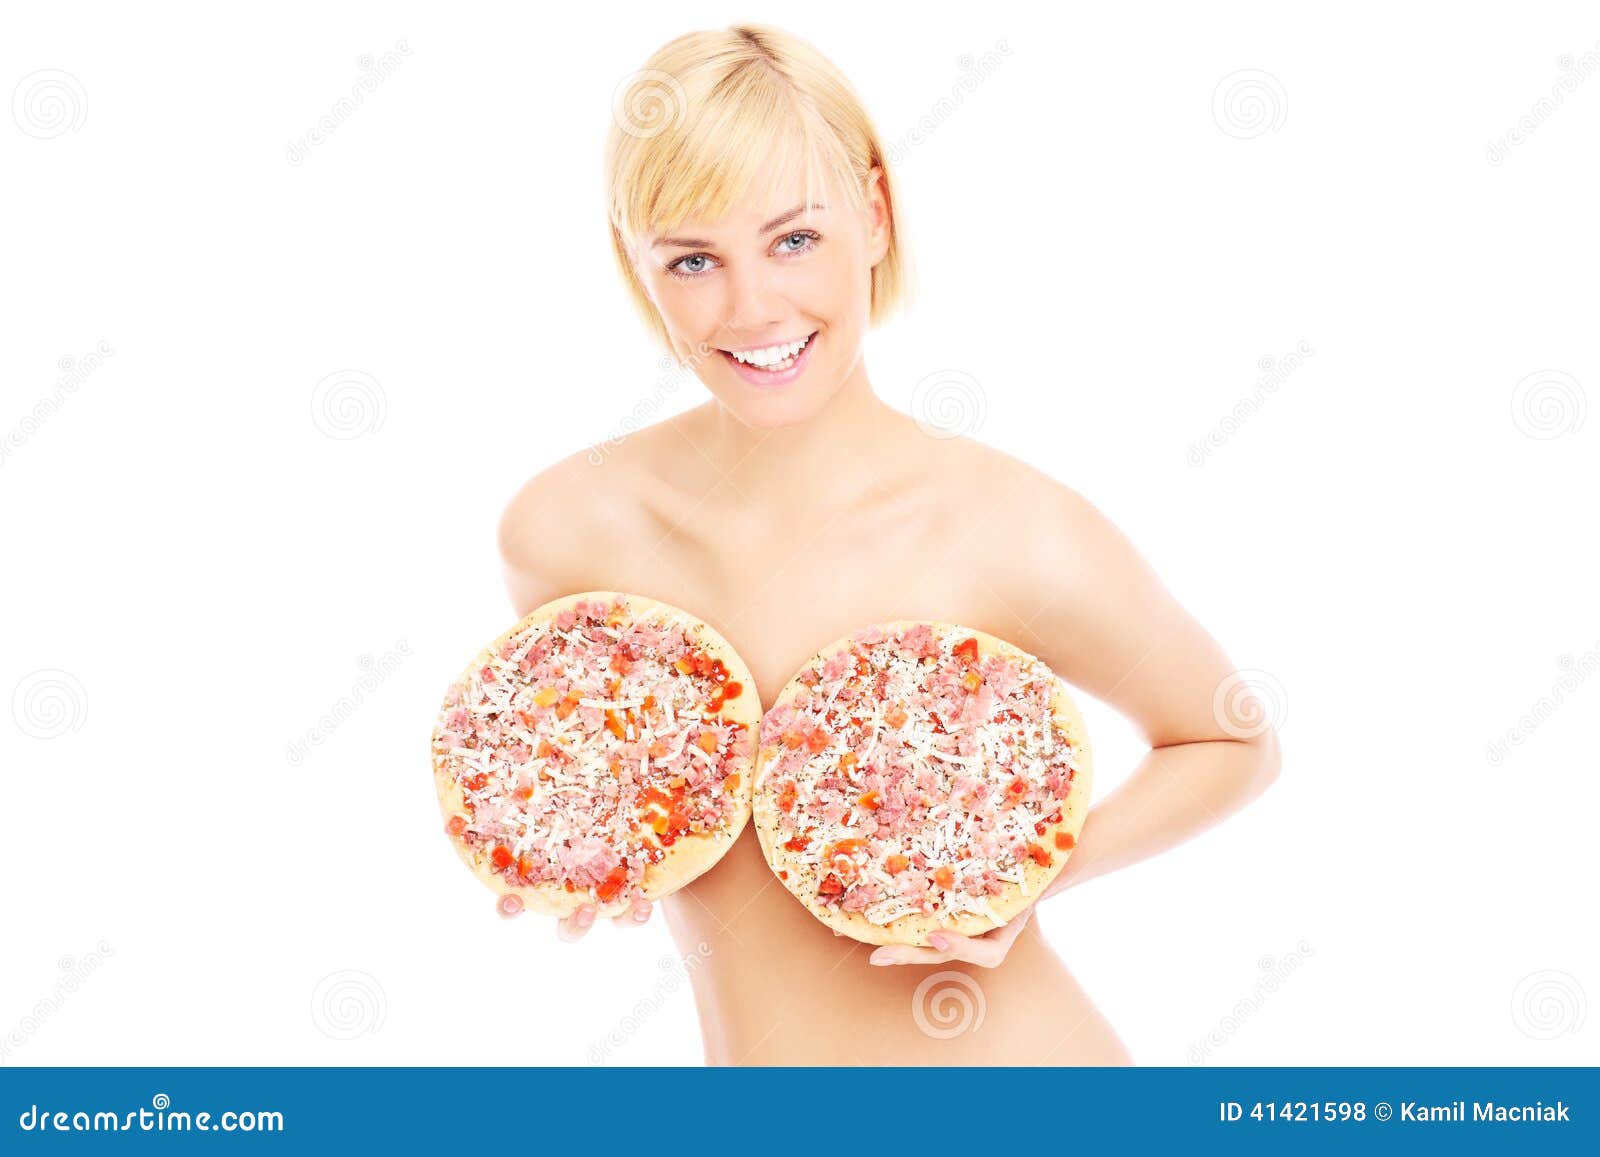 ashan pathirana share naked girl eating pizza photos